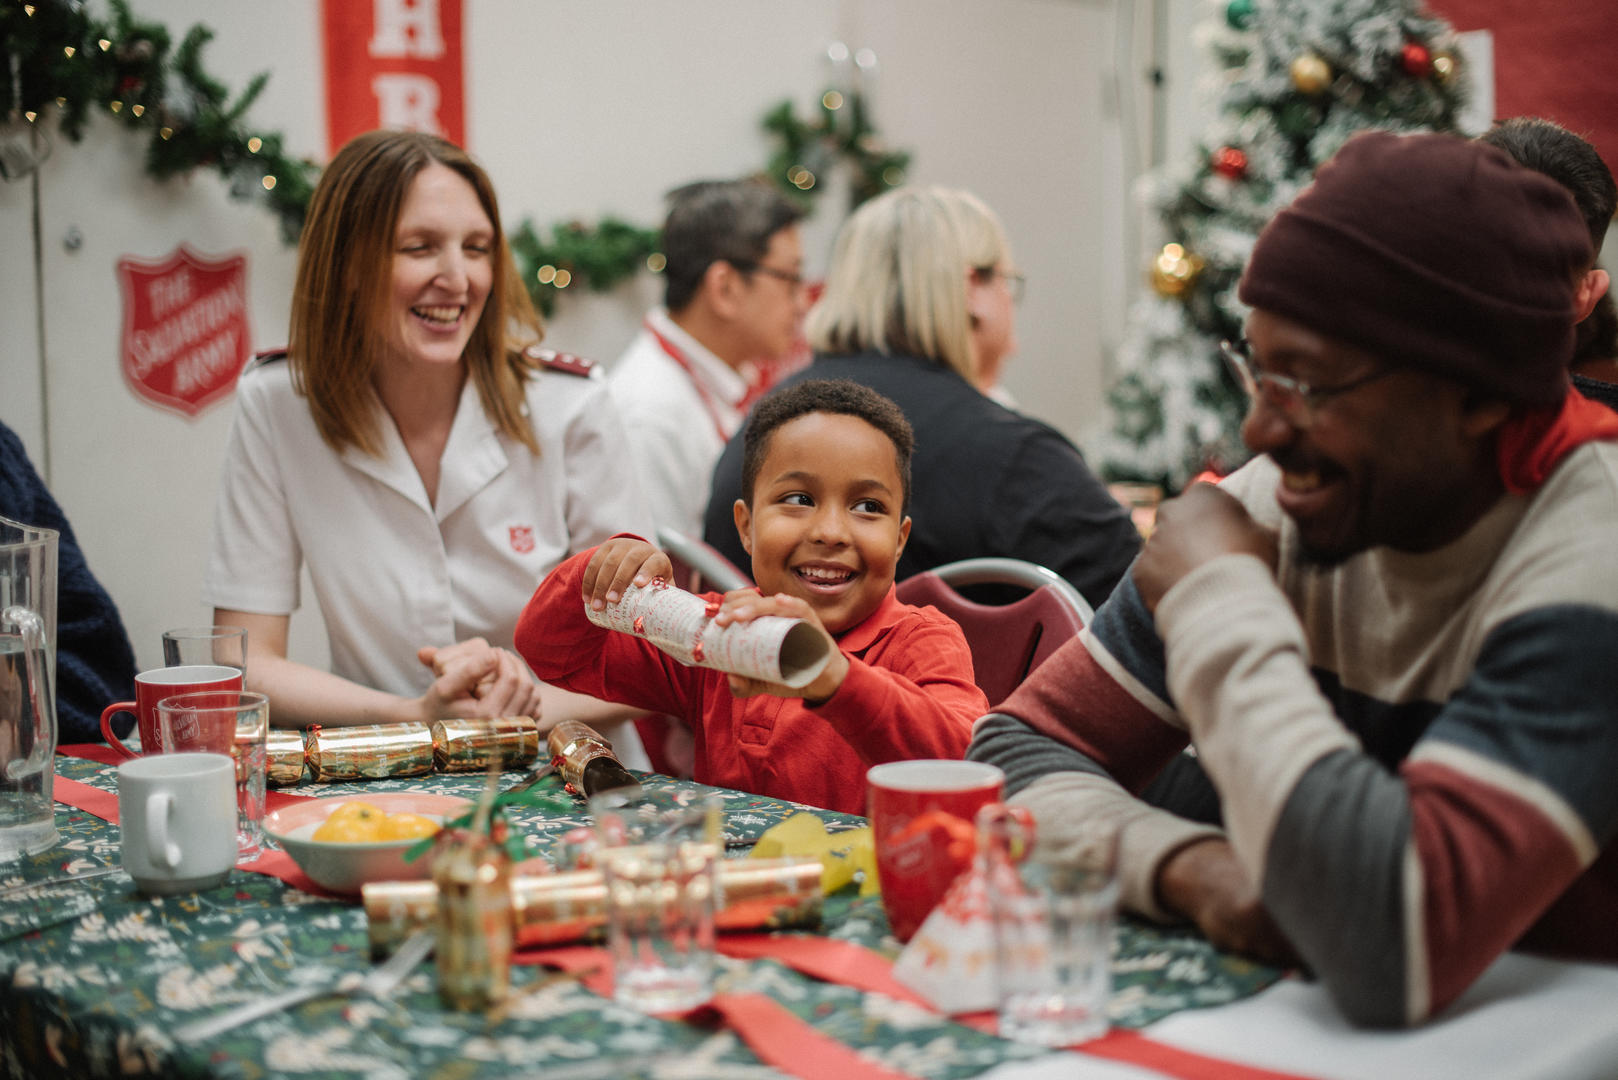 A Christmas celebration at a Salvation Army centre